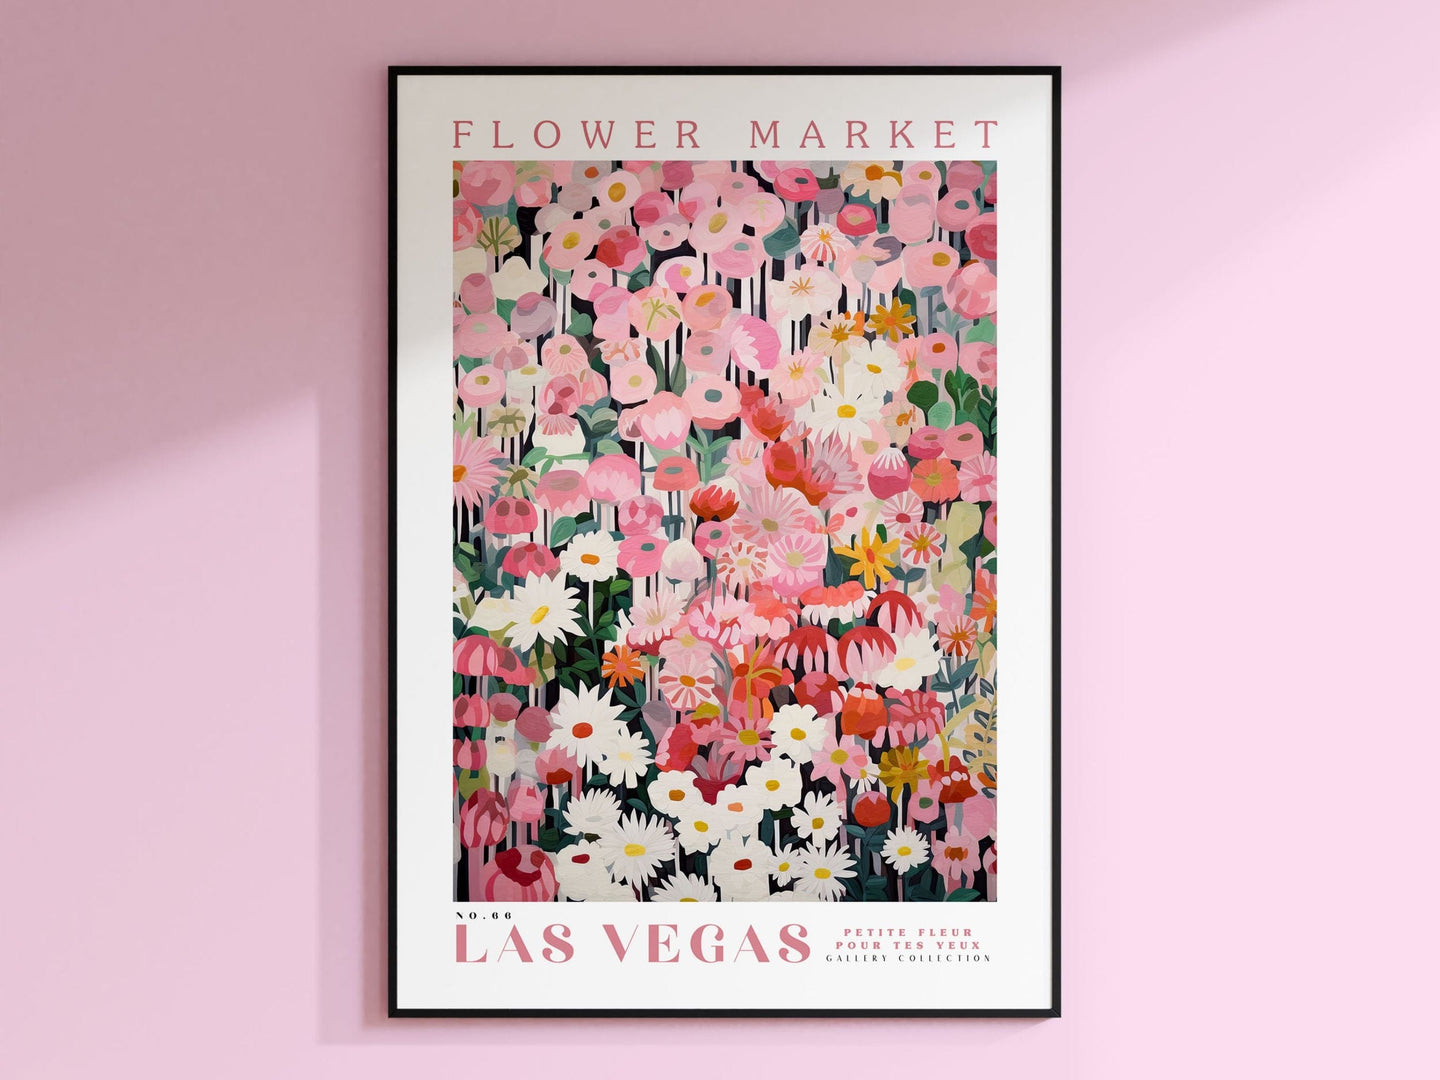 Las Vegas Flower Market Poster